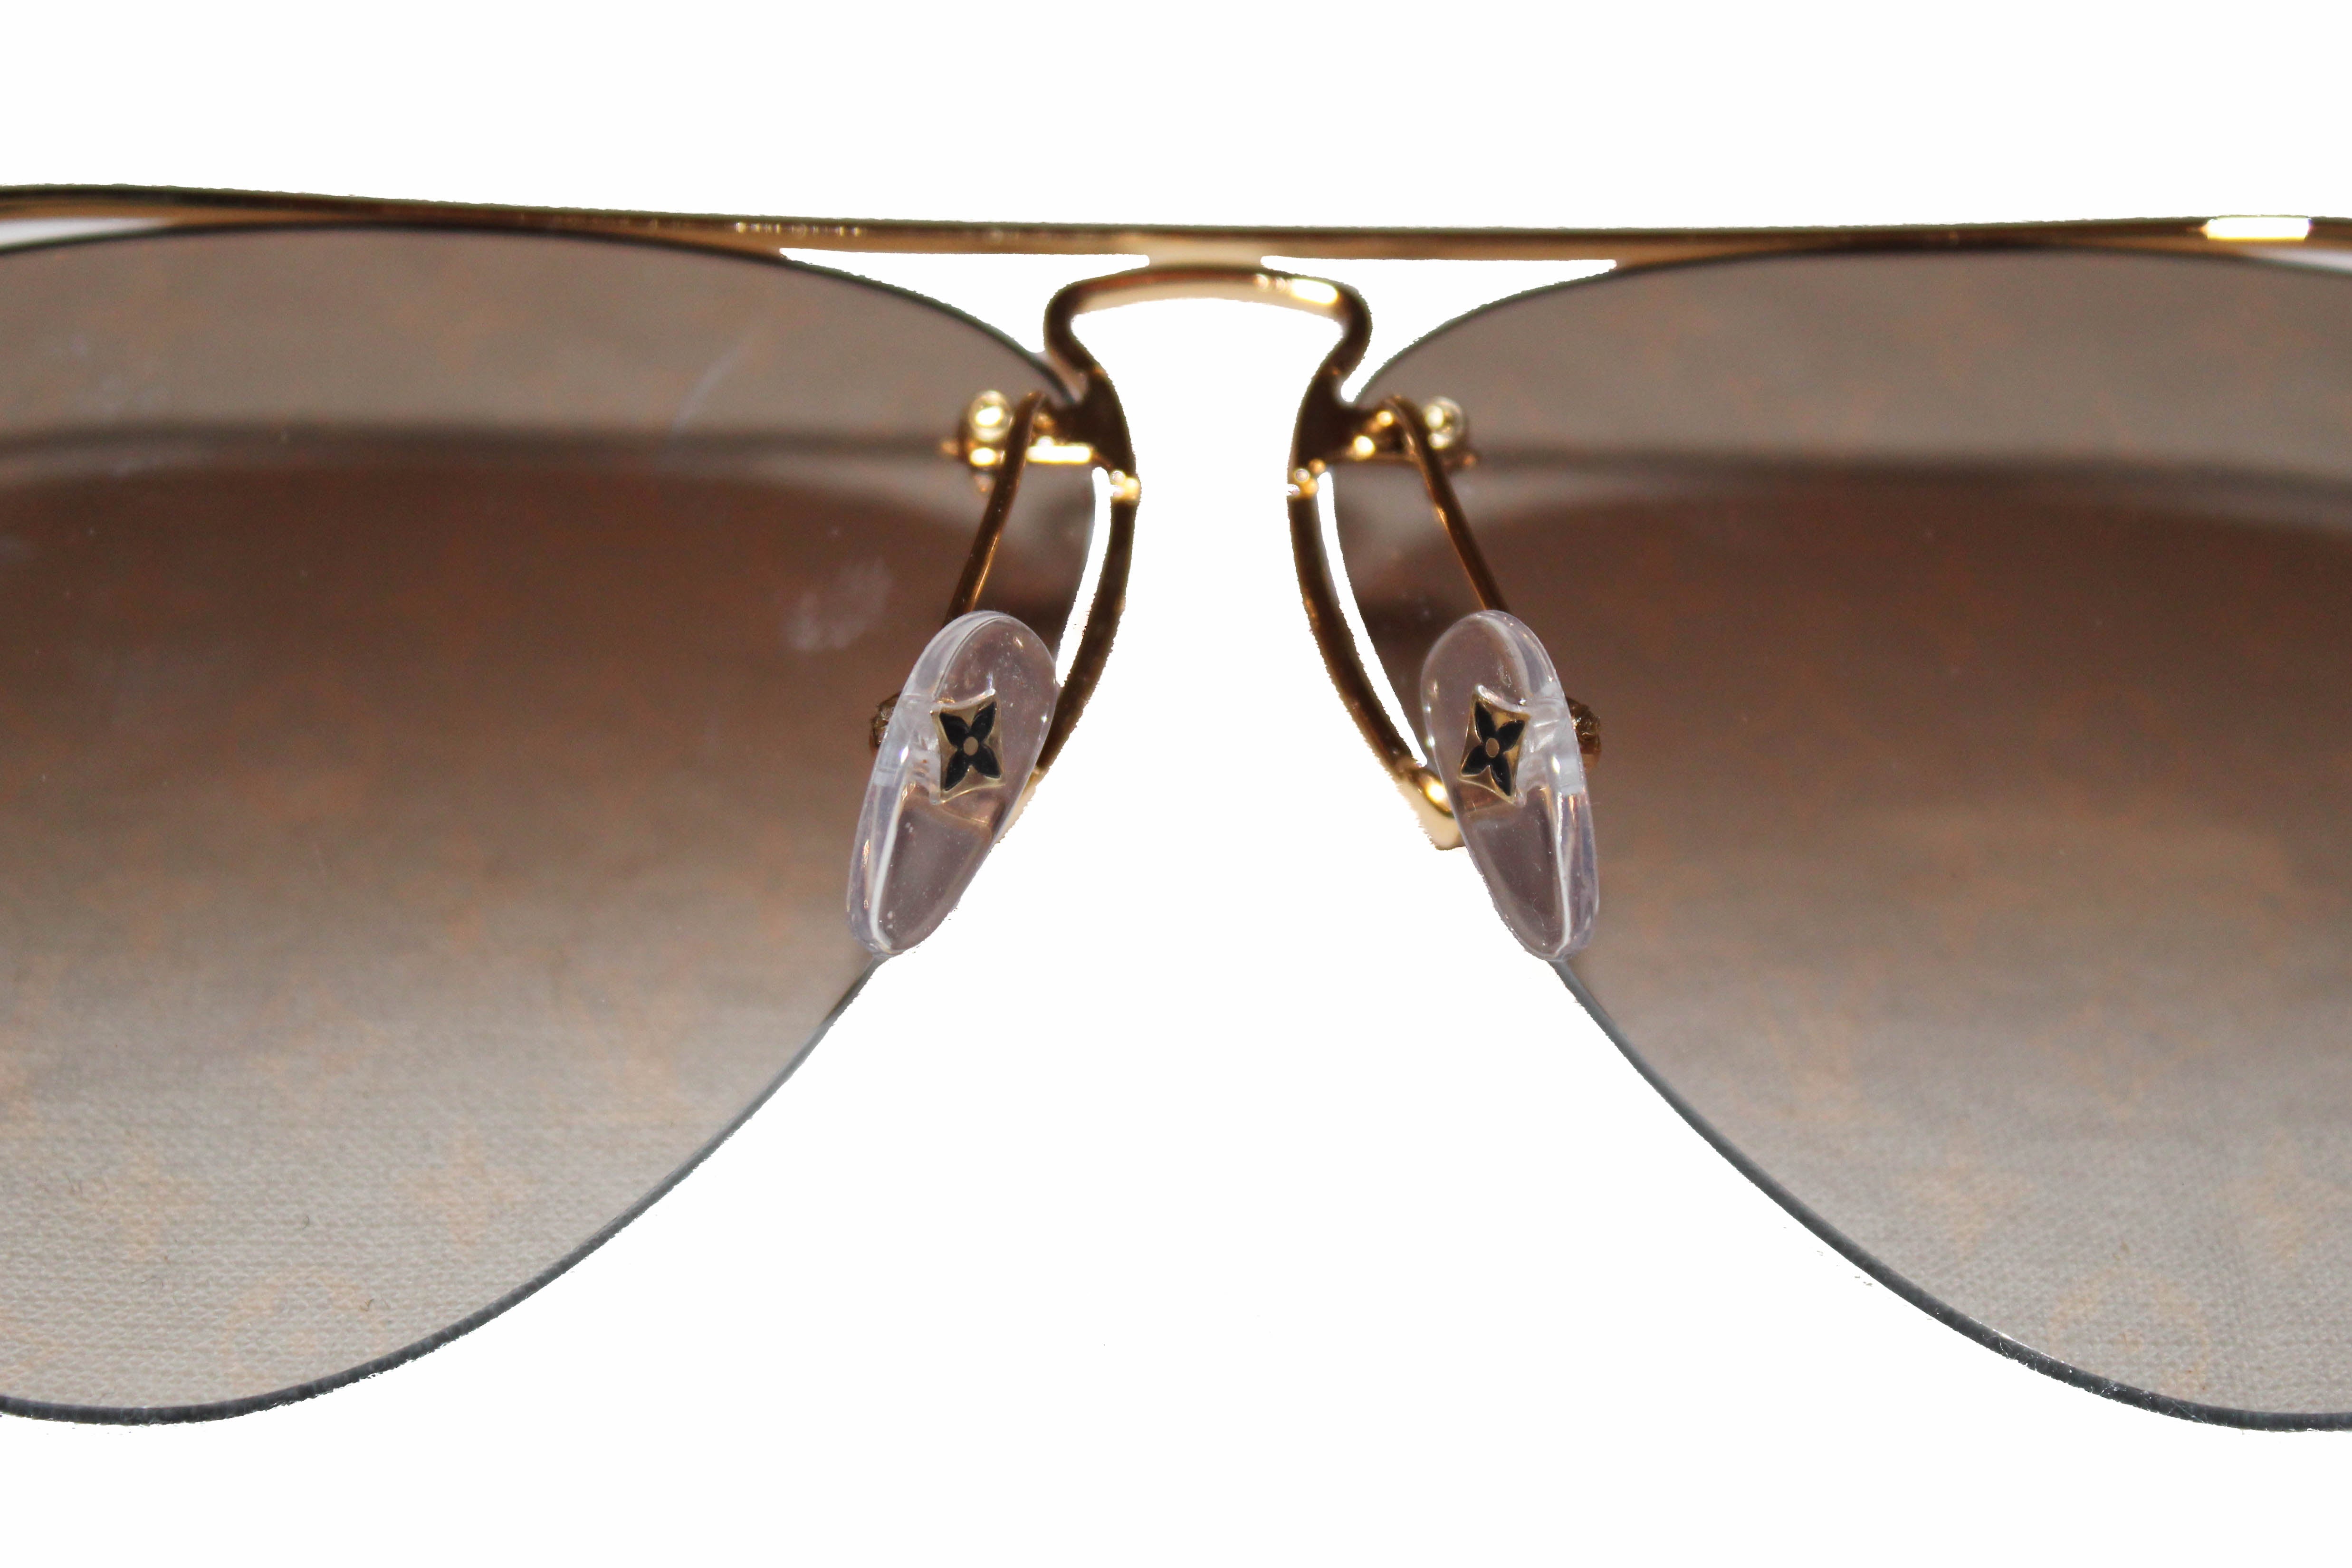 Louis Vuitton 2020 SS Grease Sunglasses (Z1366W)